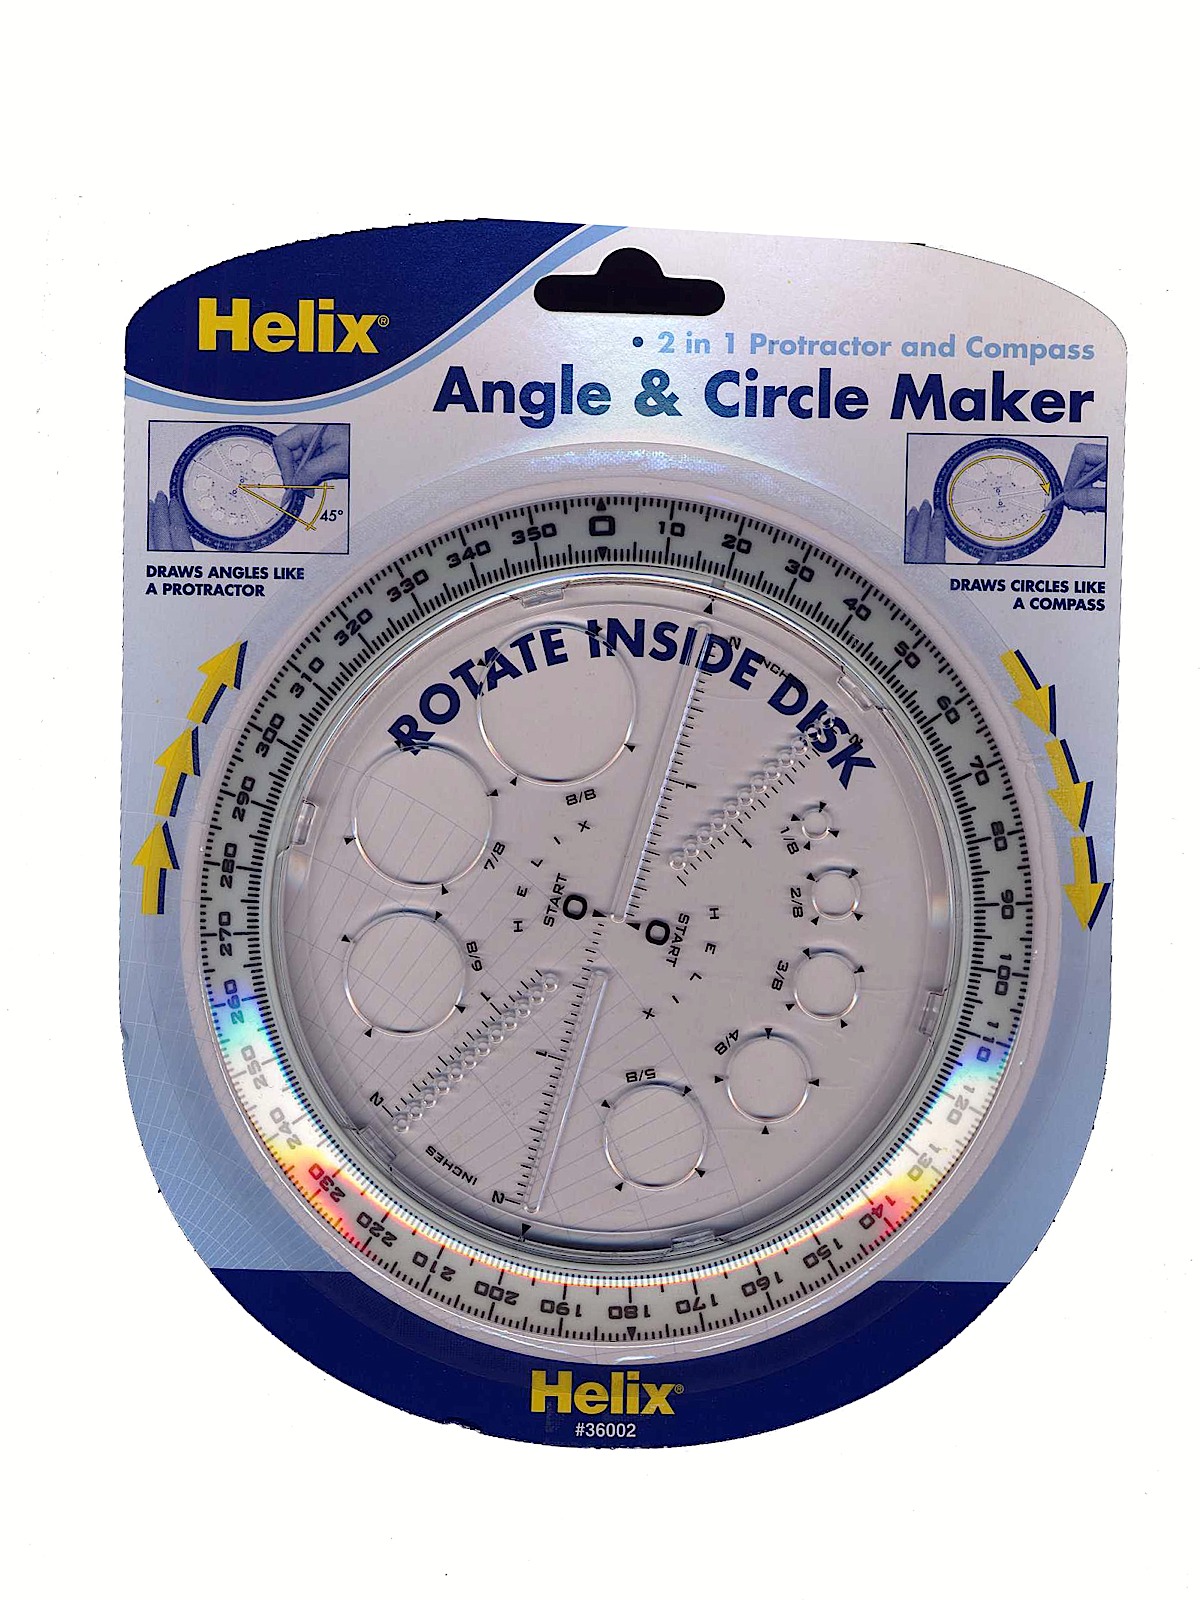 Angle & Circle Maker Protractor Compass